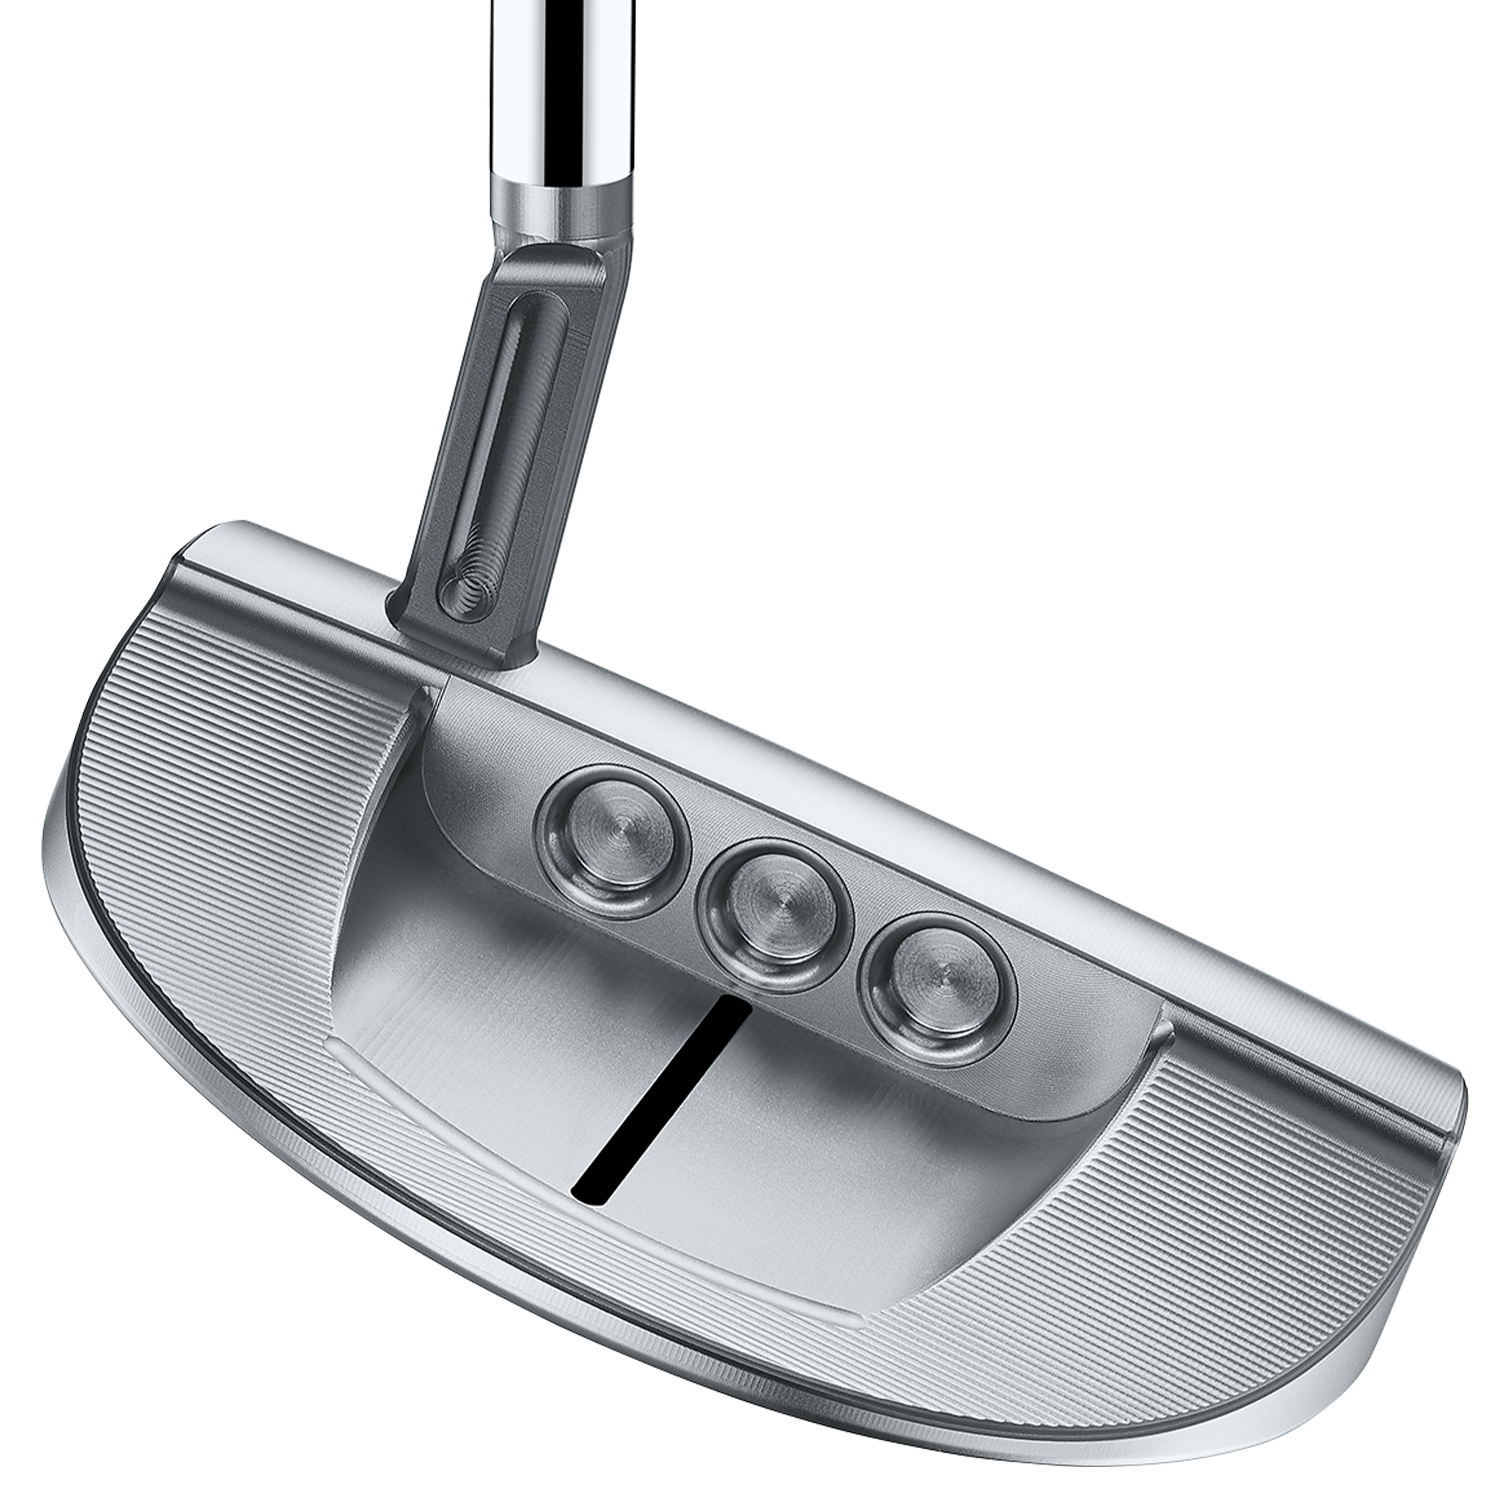 Scotty Cameron Super Select GOLO 6.5 Golf Putter